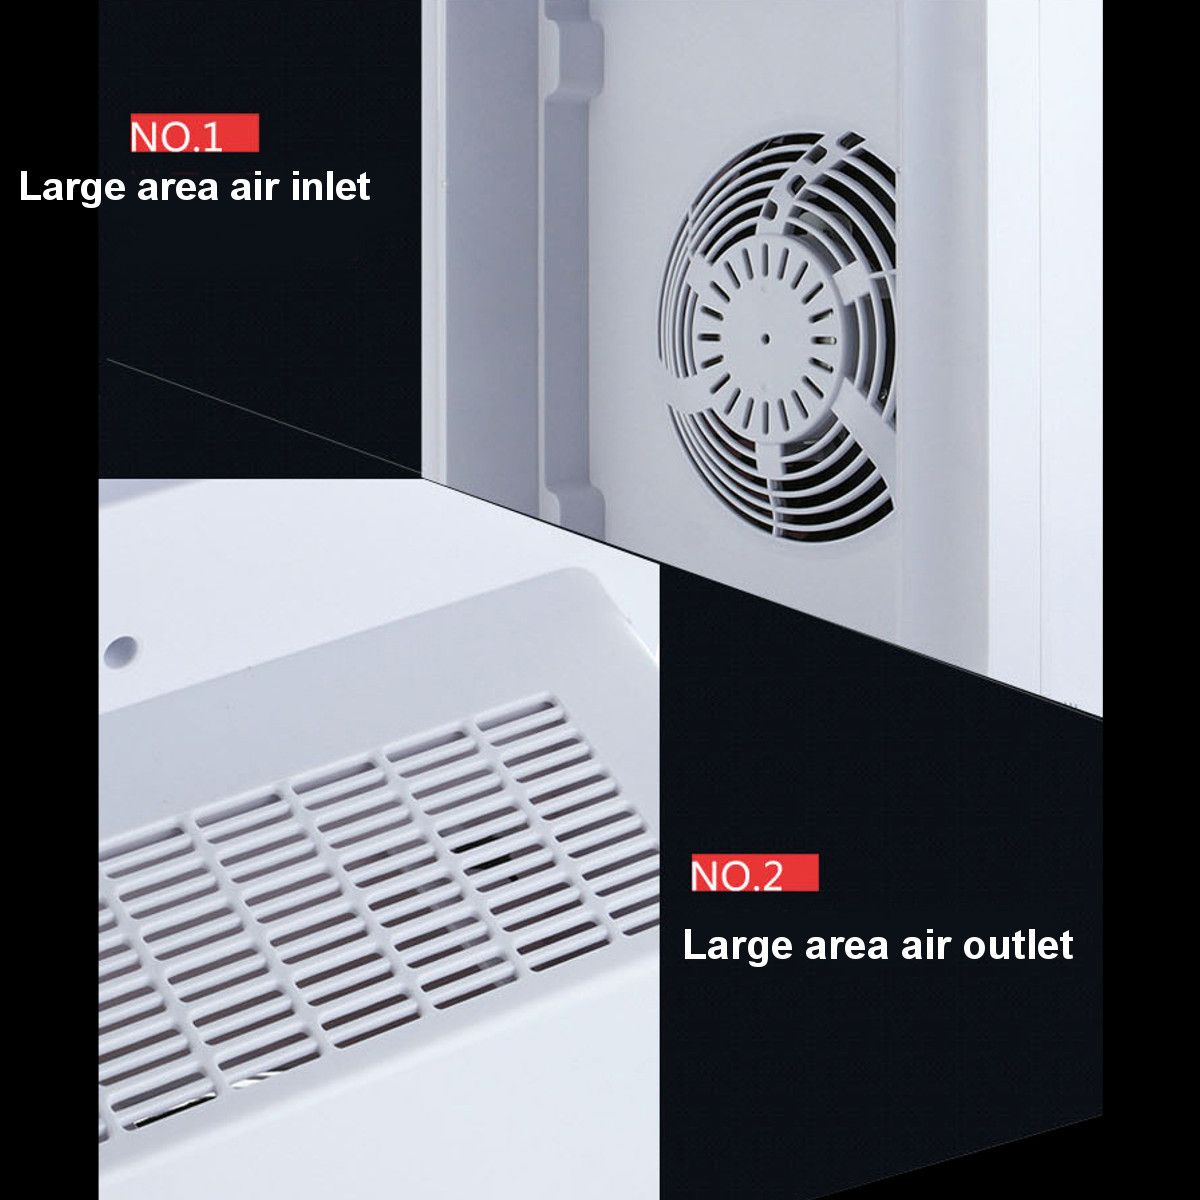 220V-50HZ-Air-Purifier-Negative-Ion-Home-Indoor-Purifier-Smoke-Remove-Formaldehyde-Defogging-Odor-Re-1632918